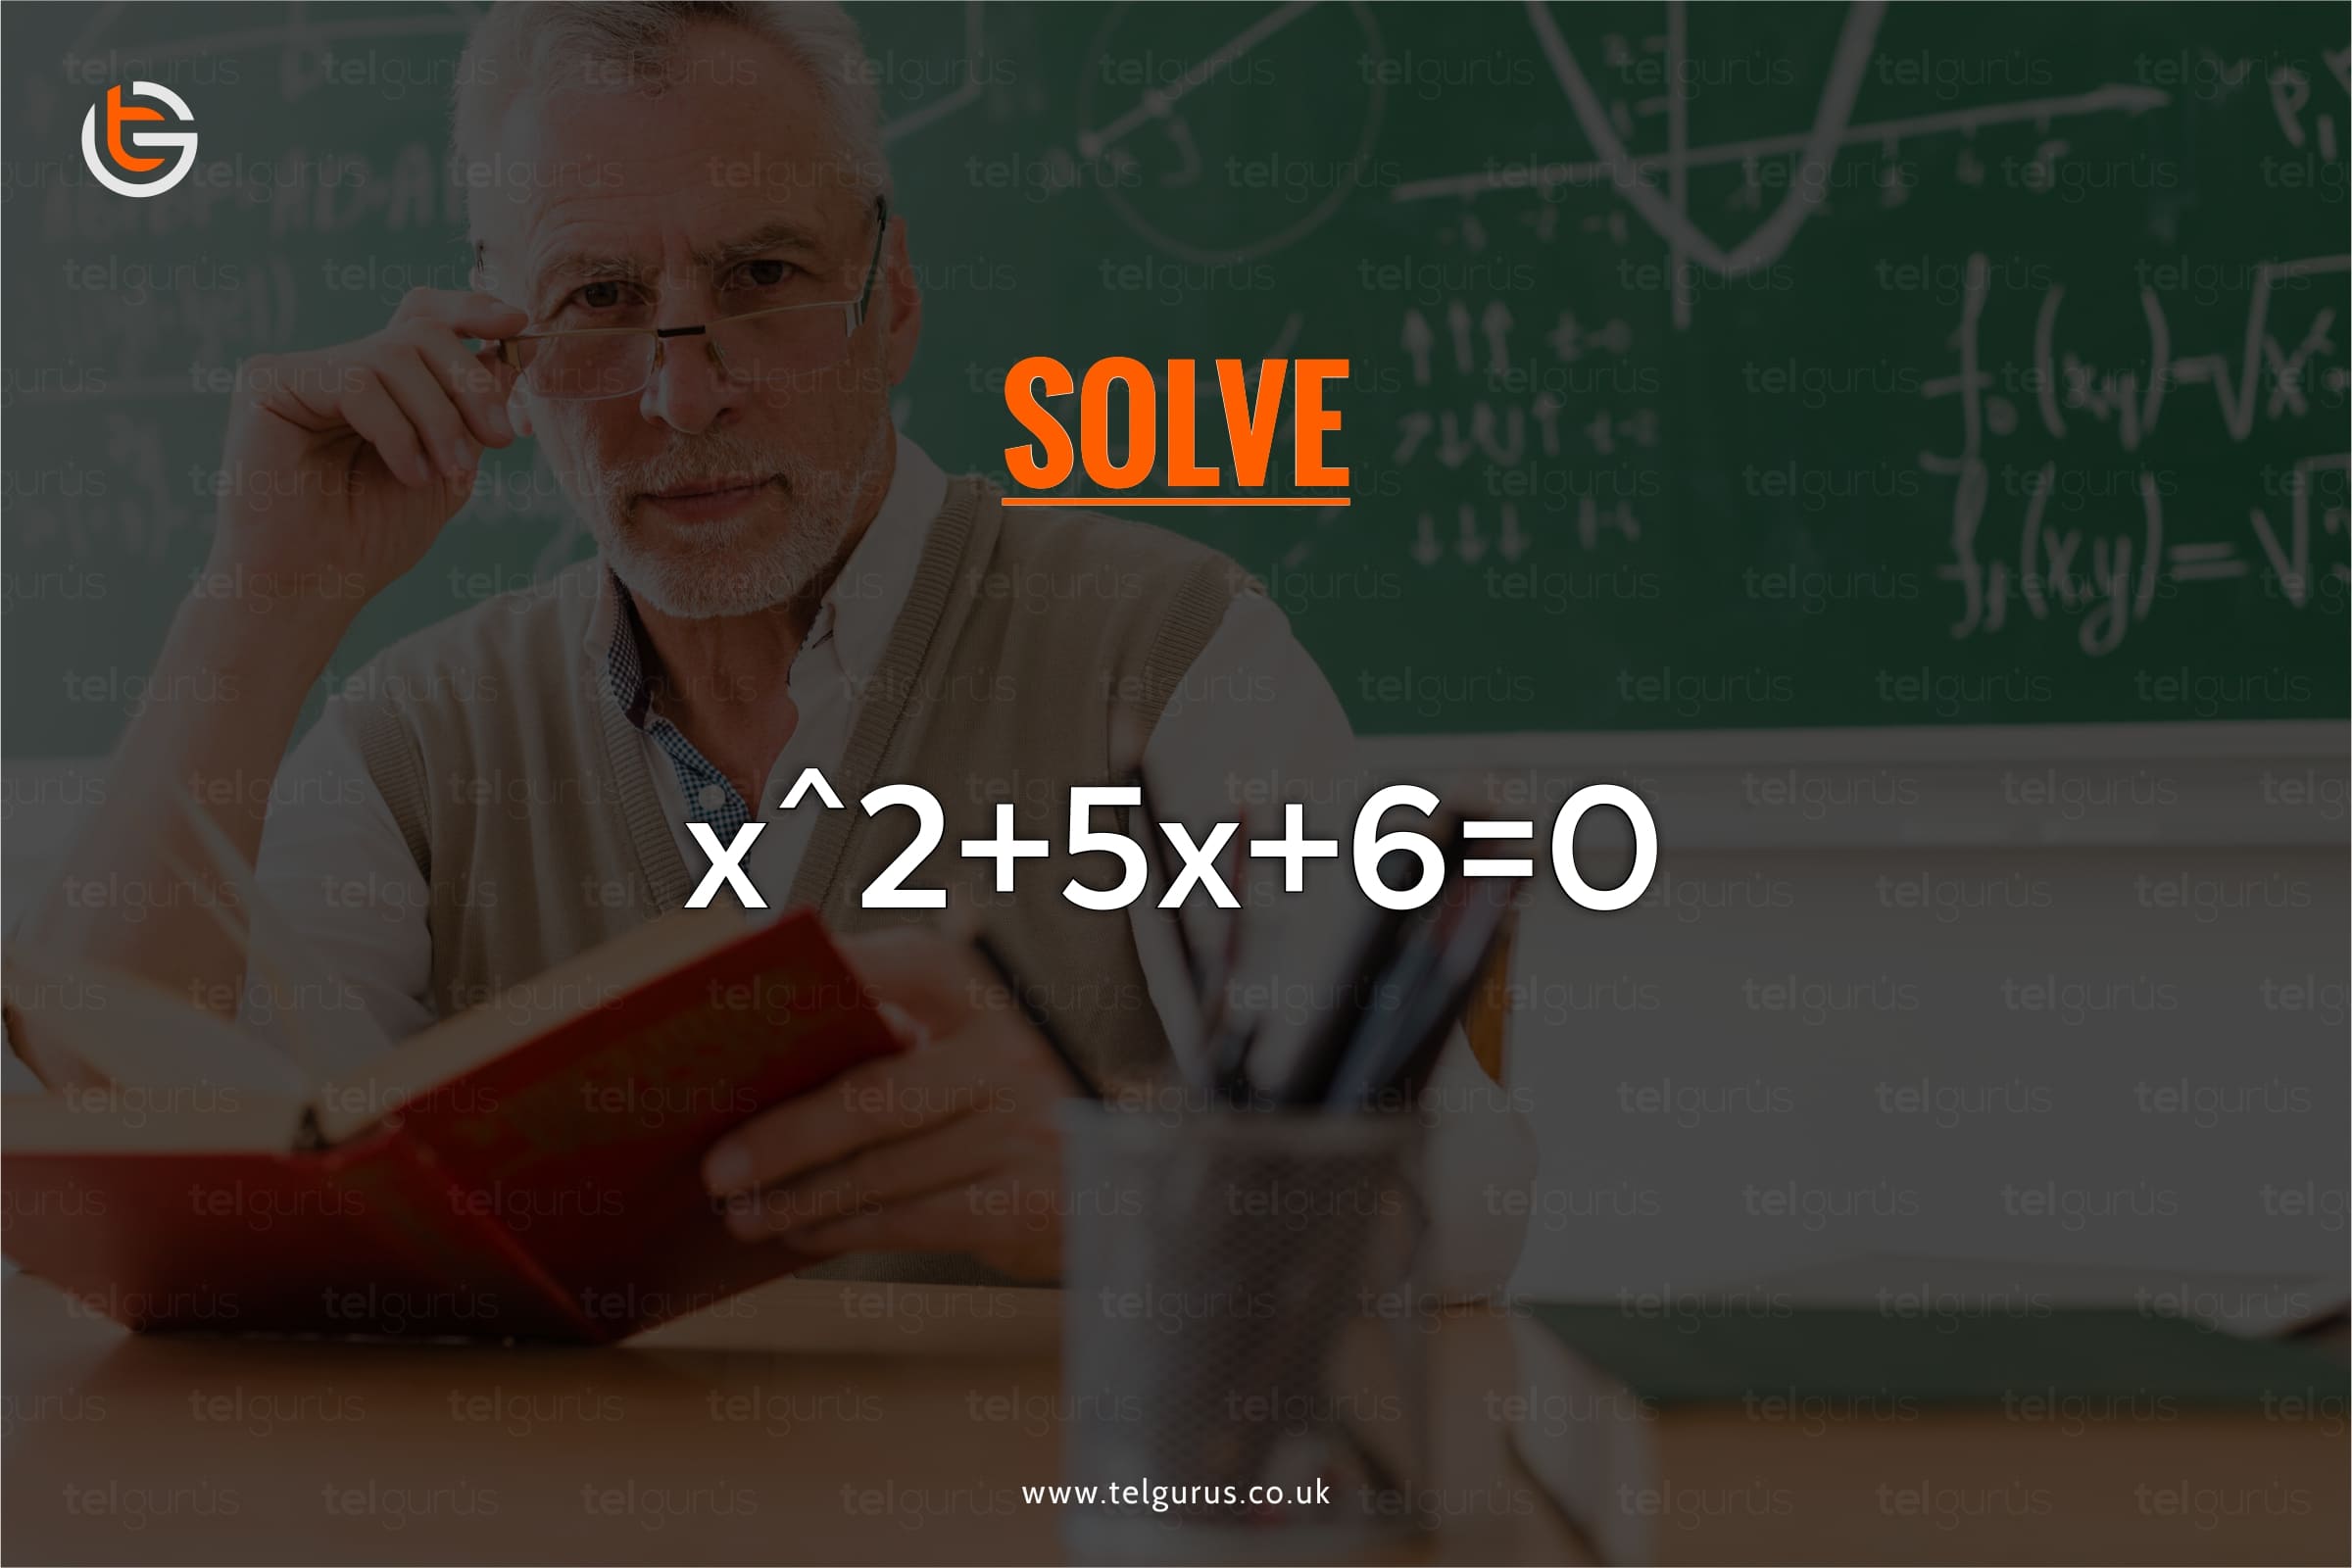 Solve x^2+5x+6=0